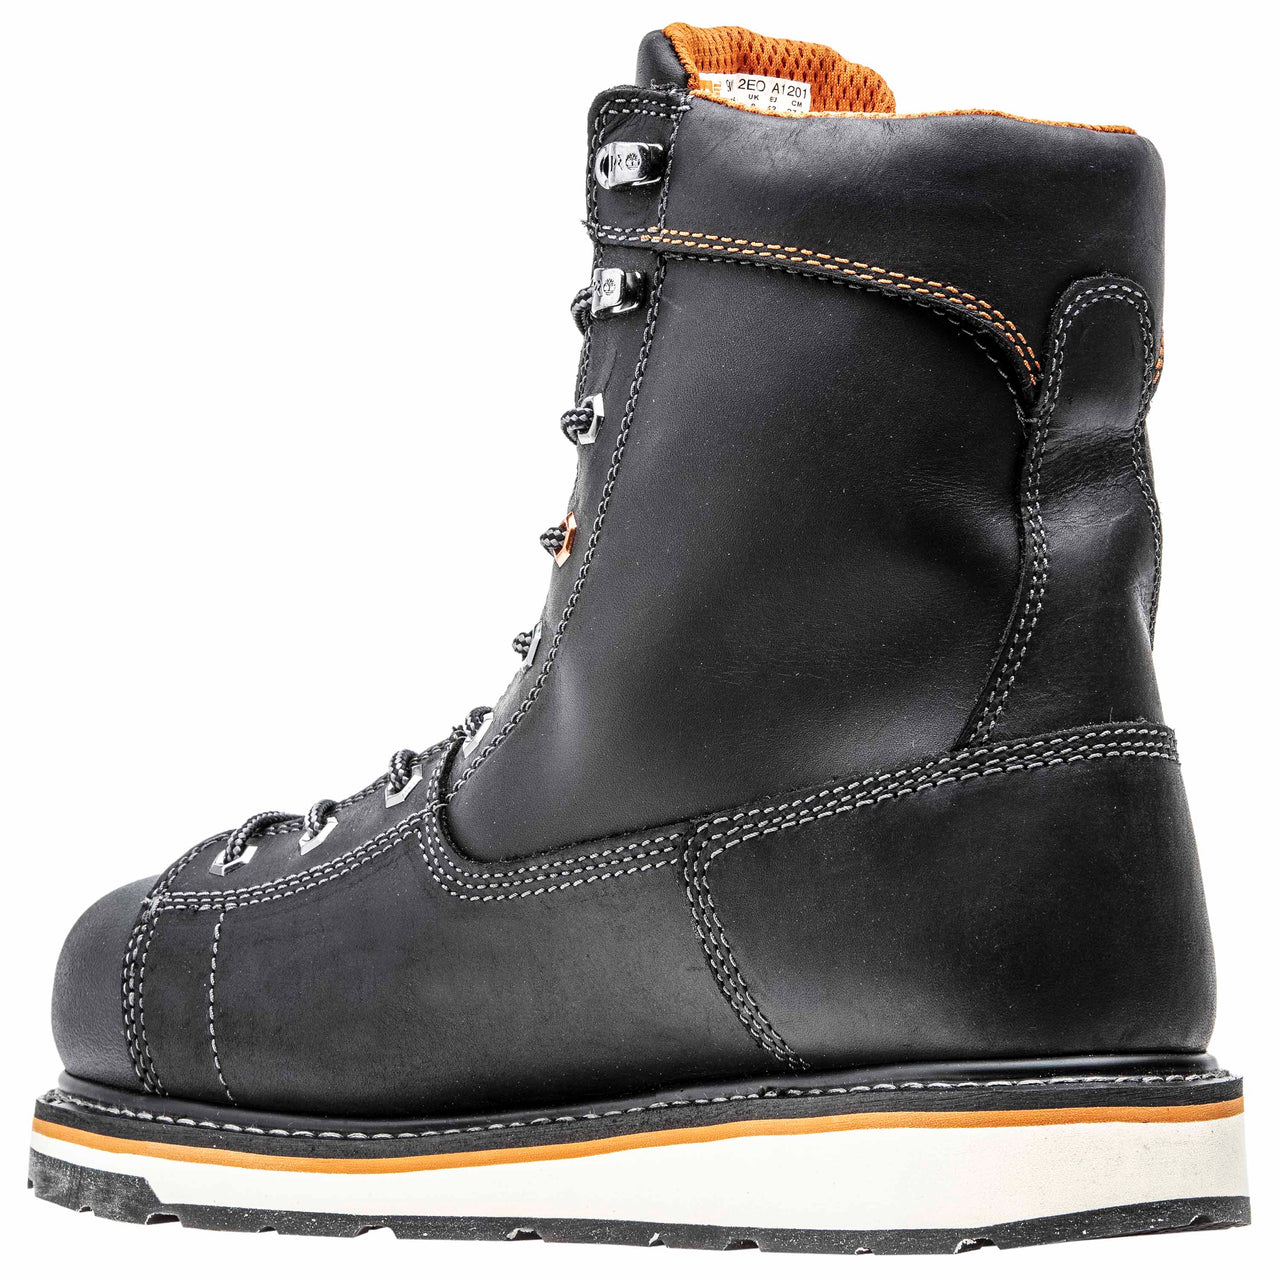 Timberland Pro Men's 8" Gridworks Black CSA Alloy Toe Work Boots TB0A12EO001